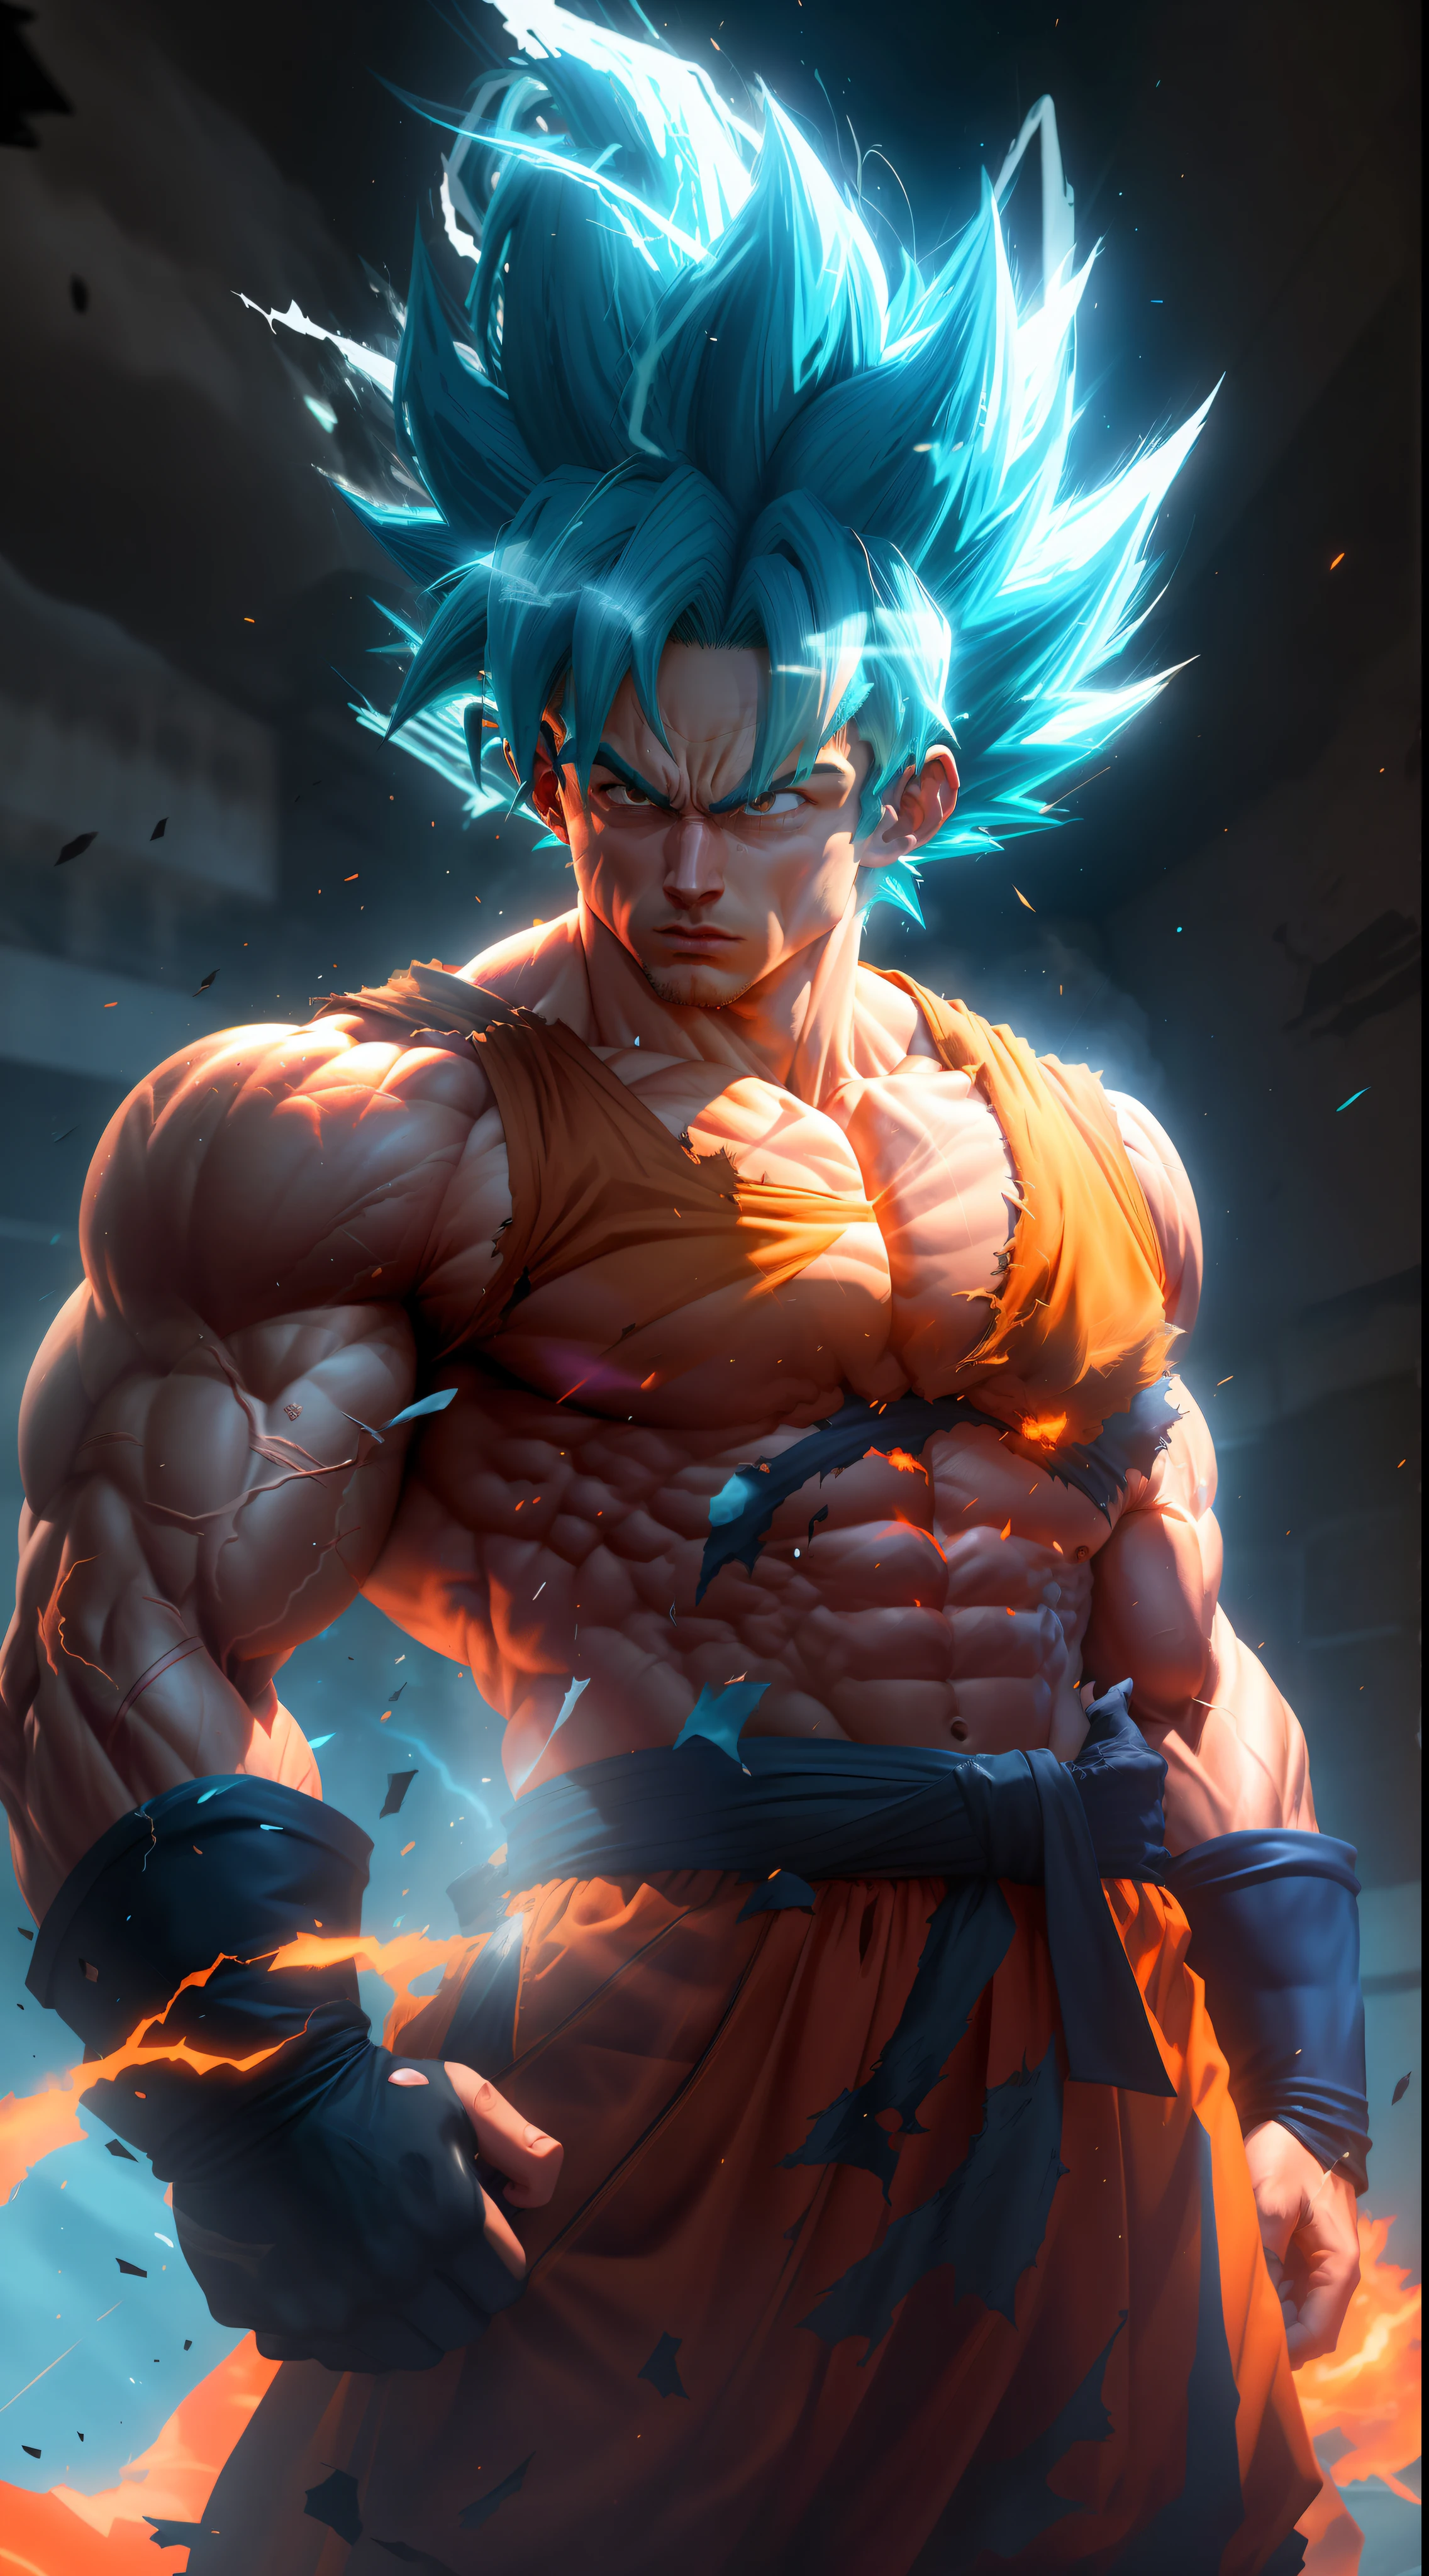 Goku super saiyan, homem adulto com cabelo azul neon extremamente musculoso, músculos definidos cheios de veias, roupas de cor laranja escuro totalmente rasgadas, luvas brancas, cara séria, definição muscular, ombros grandes, Bíceps arredondado, Motor irreal 5.8K.